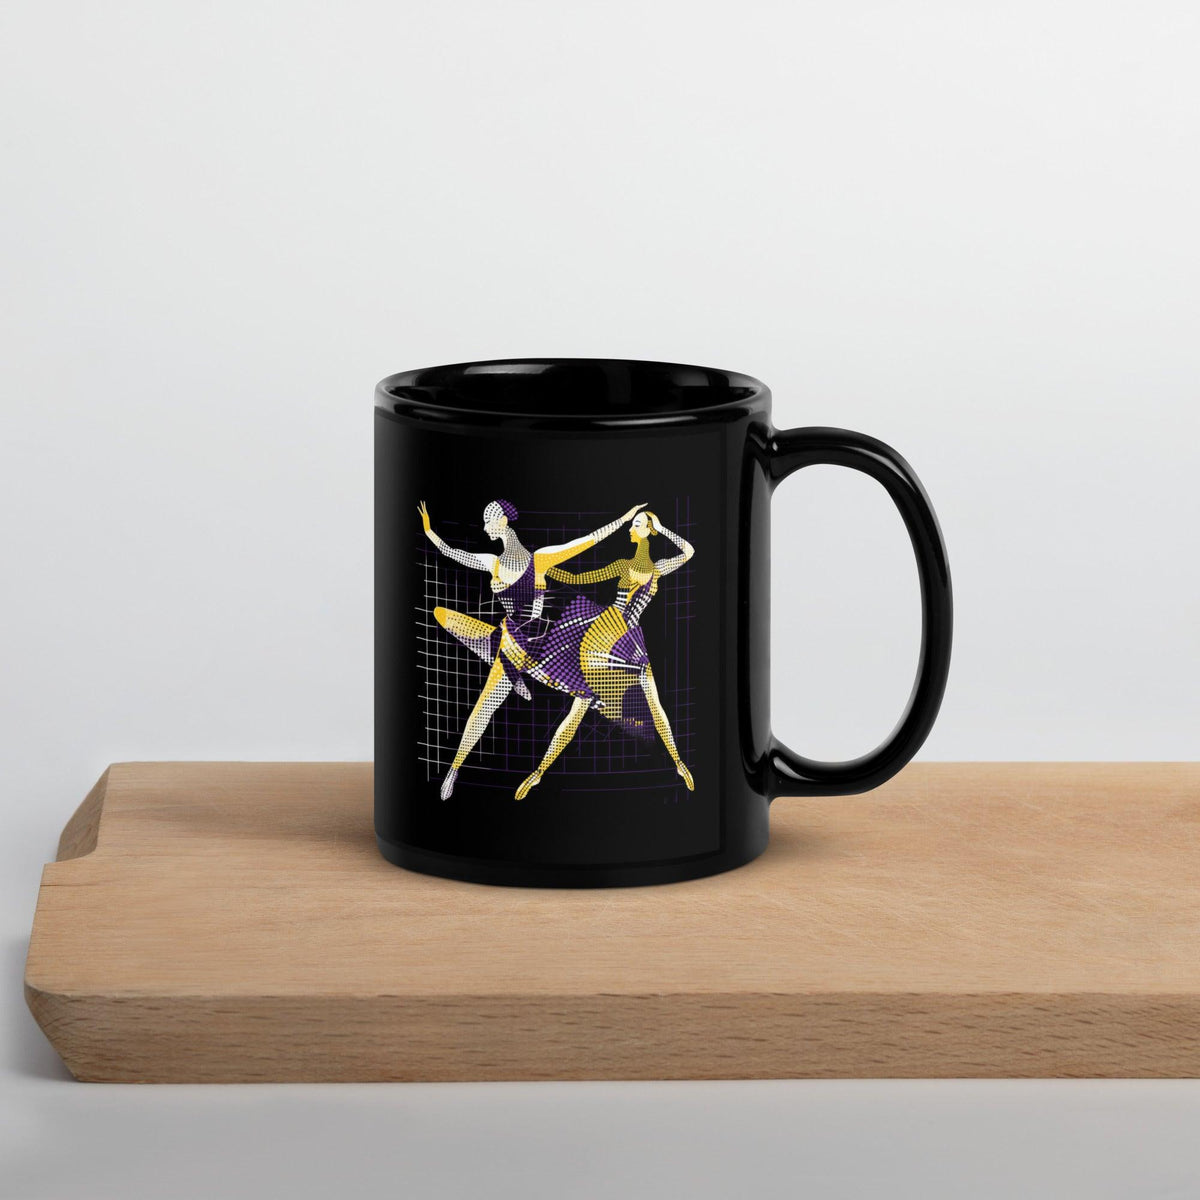 Black glossy mug with dazzling feminine dance design.